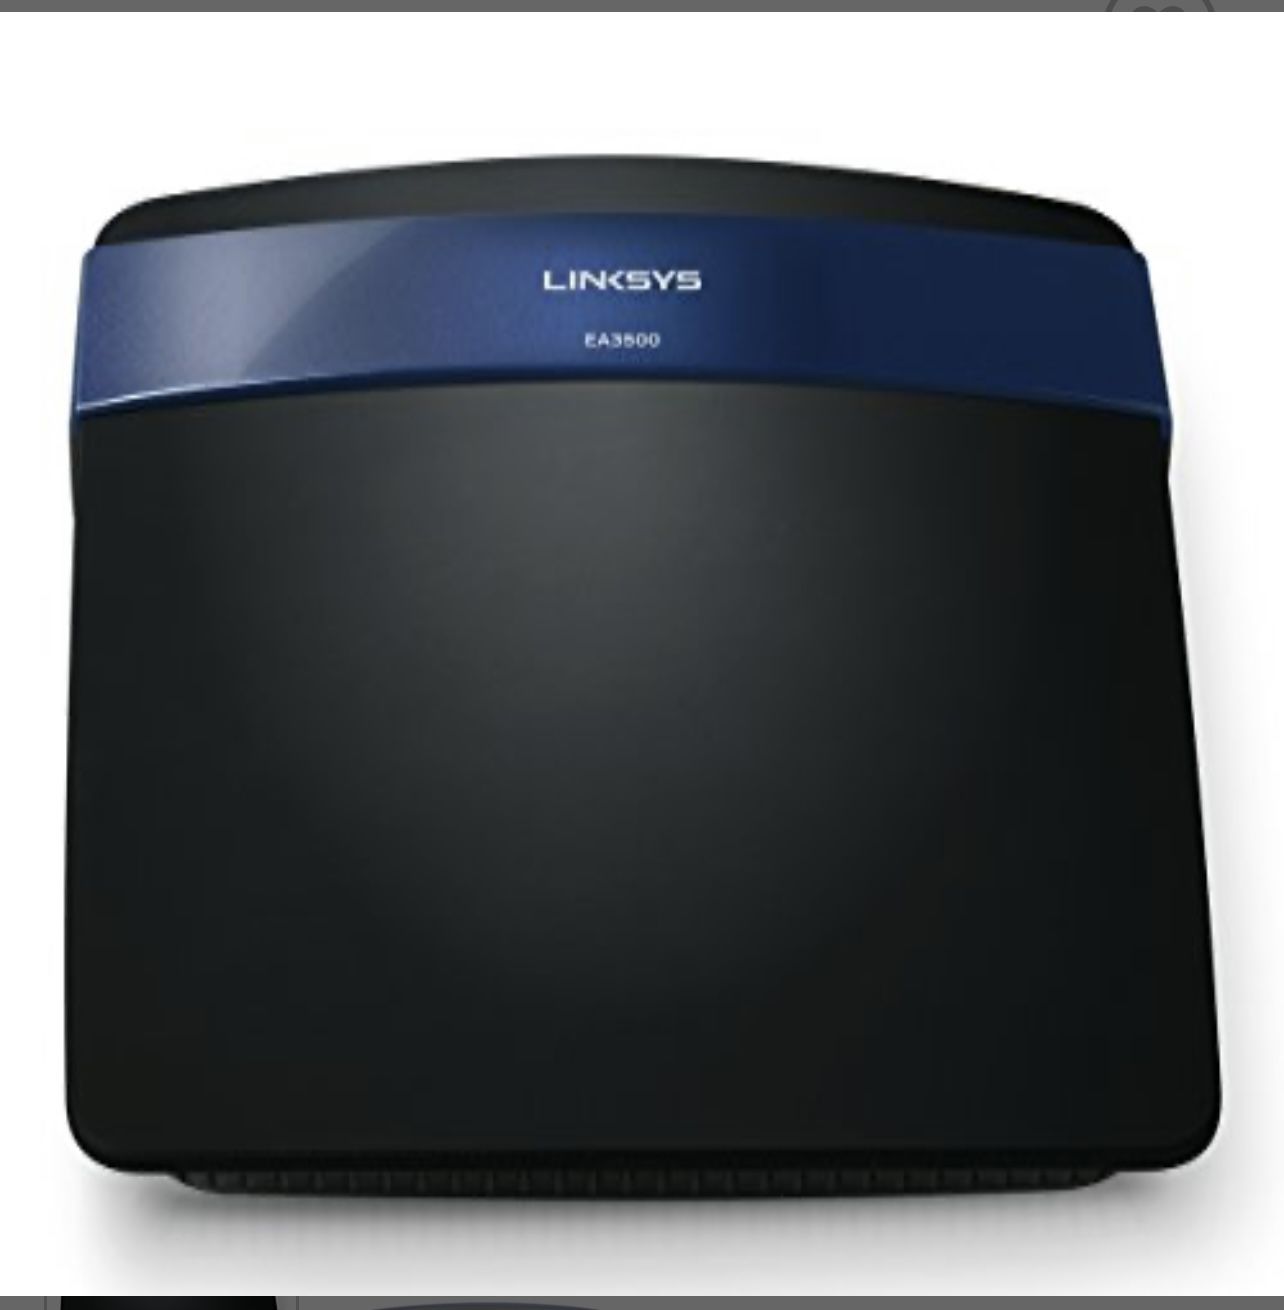 Certified Renewed Linksys N750 Dual-Band Smart Wi-Fi Router (EA3500),